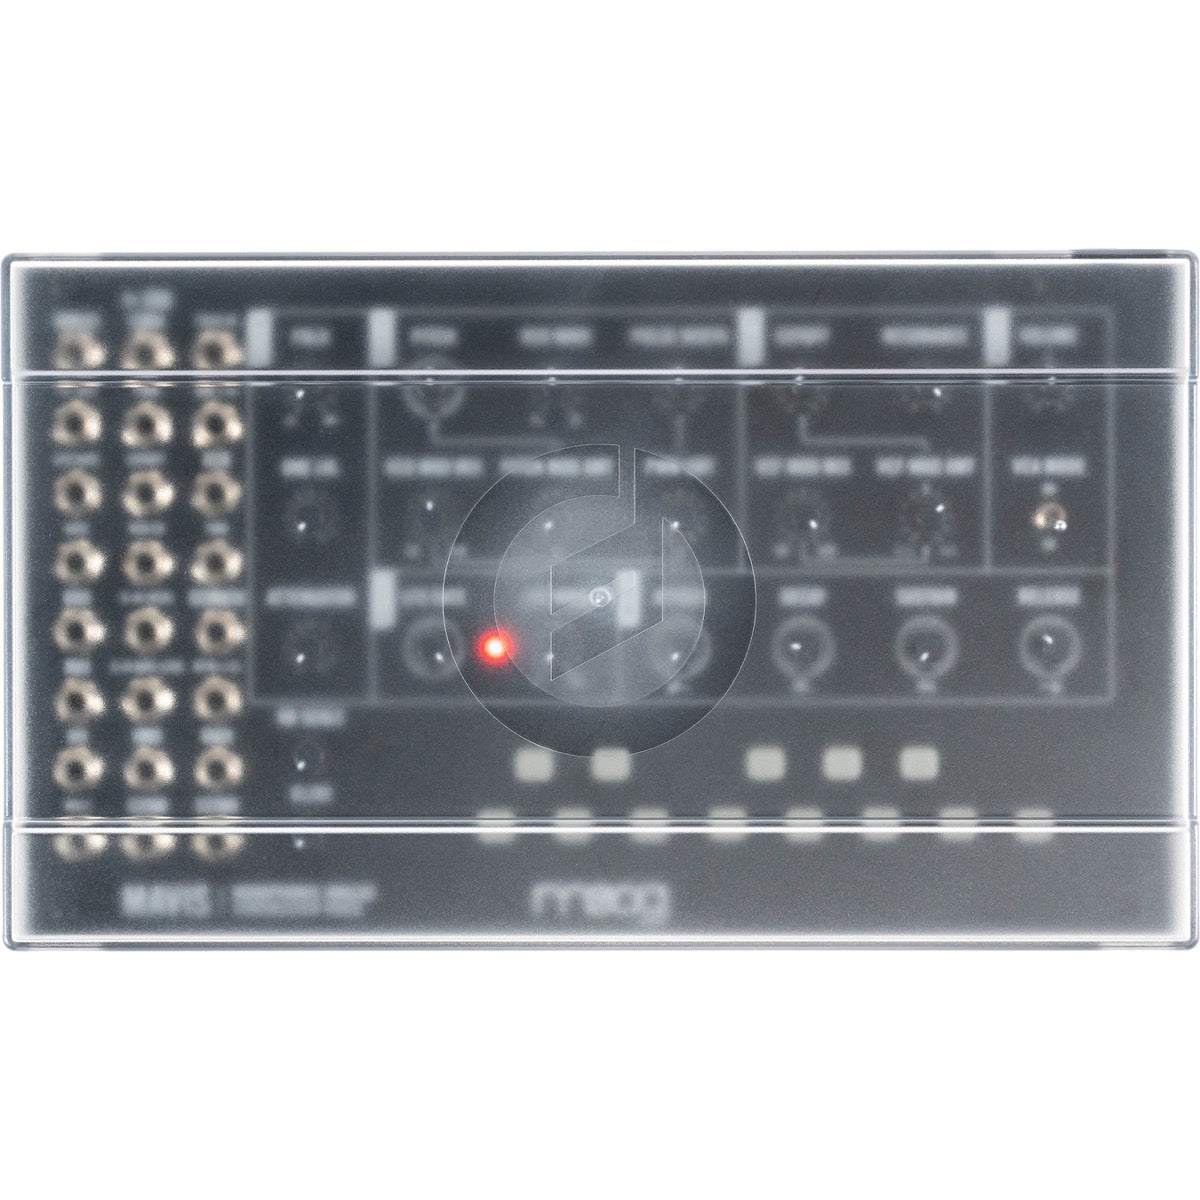 Moog Mavis Build-it-Yourself Analog Synthesizer View 3